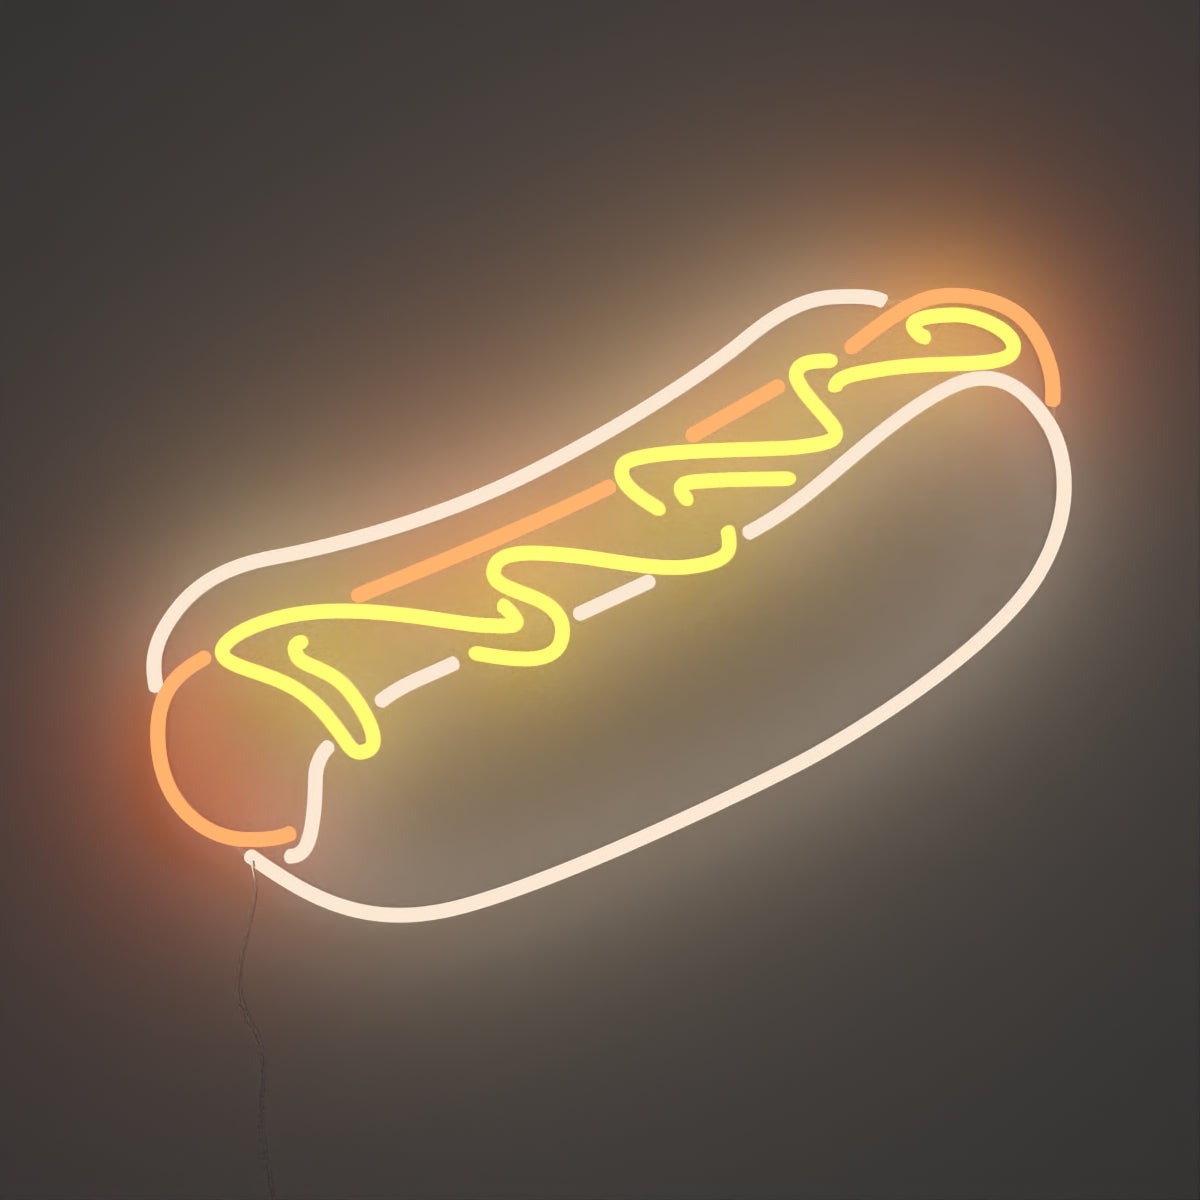 Hot Dog, Neon Tabela - Neonbir